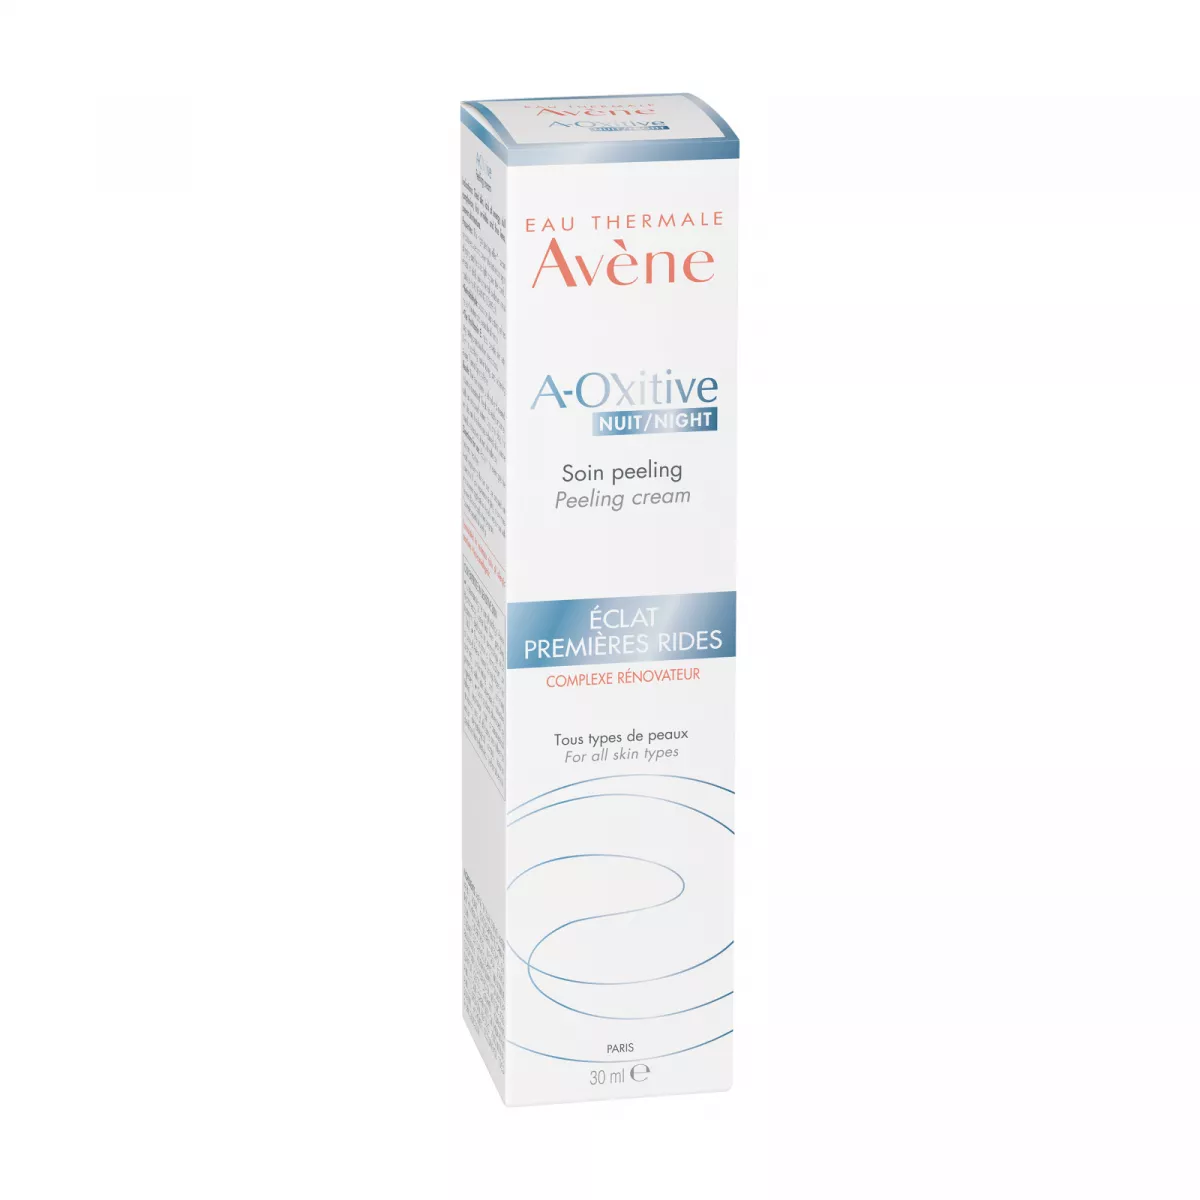 Avene A-oxitive Crema de noapte exfolianta, 30ml 